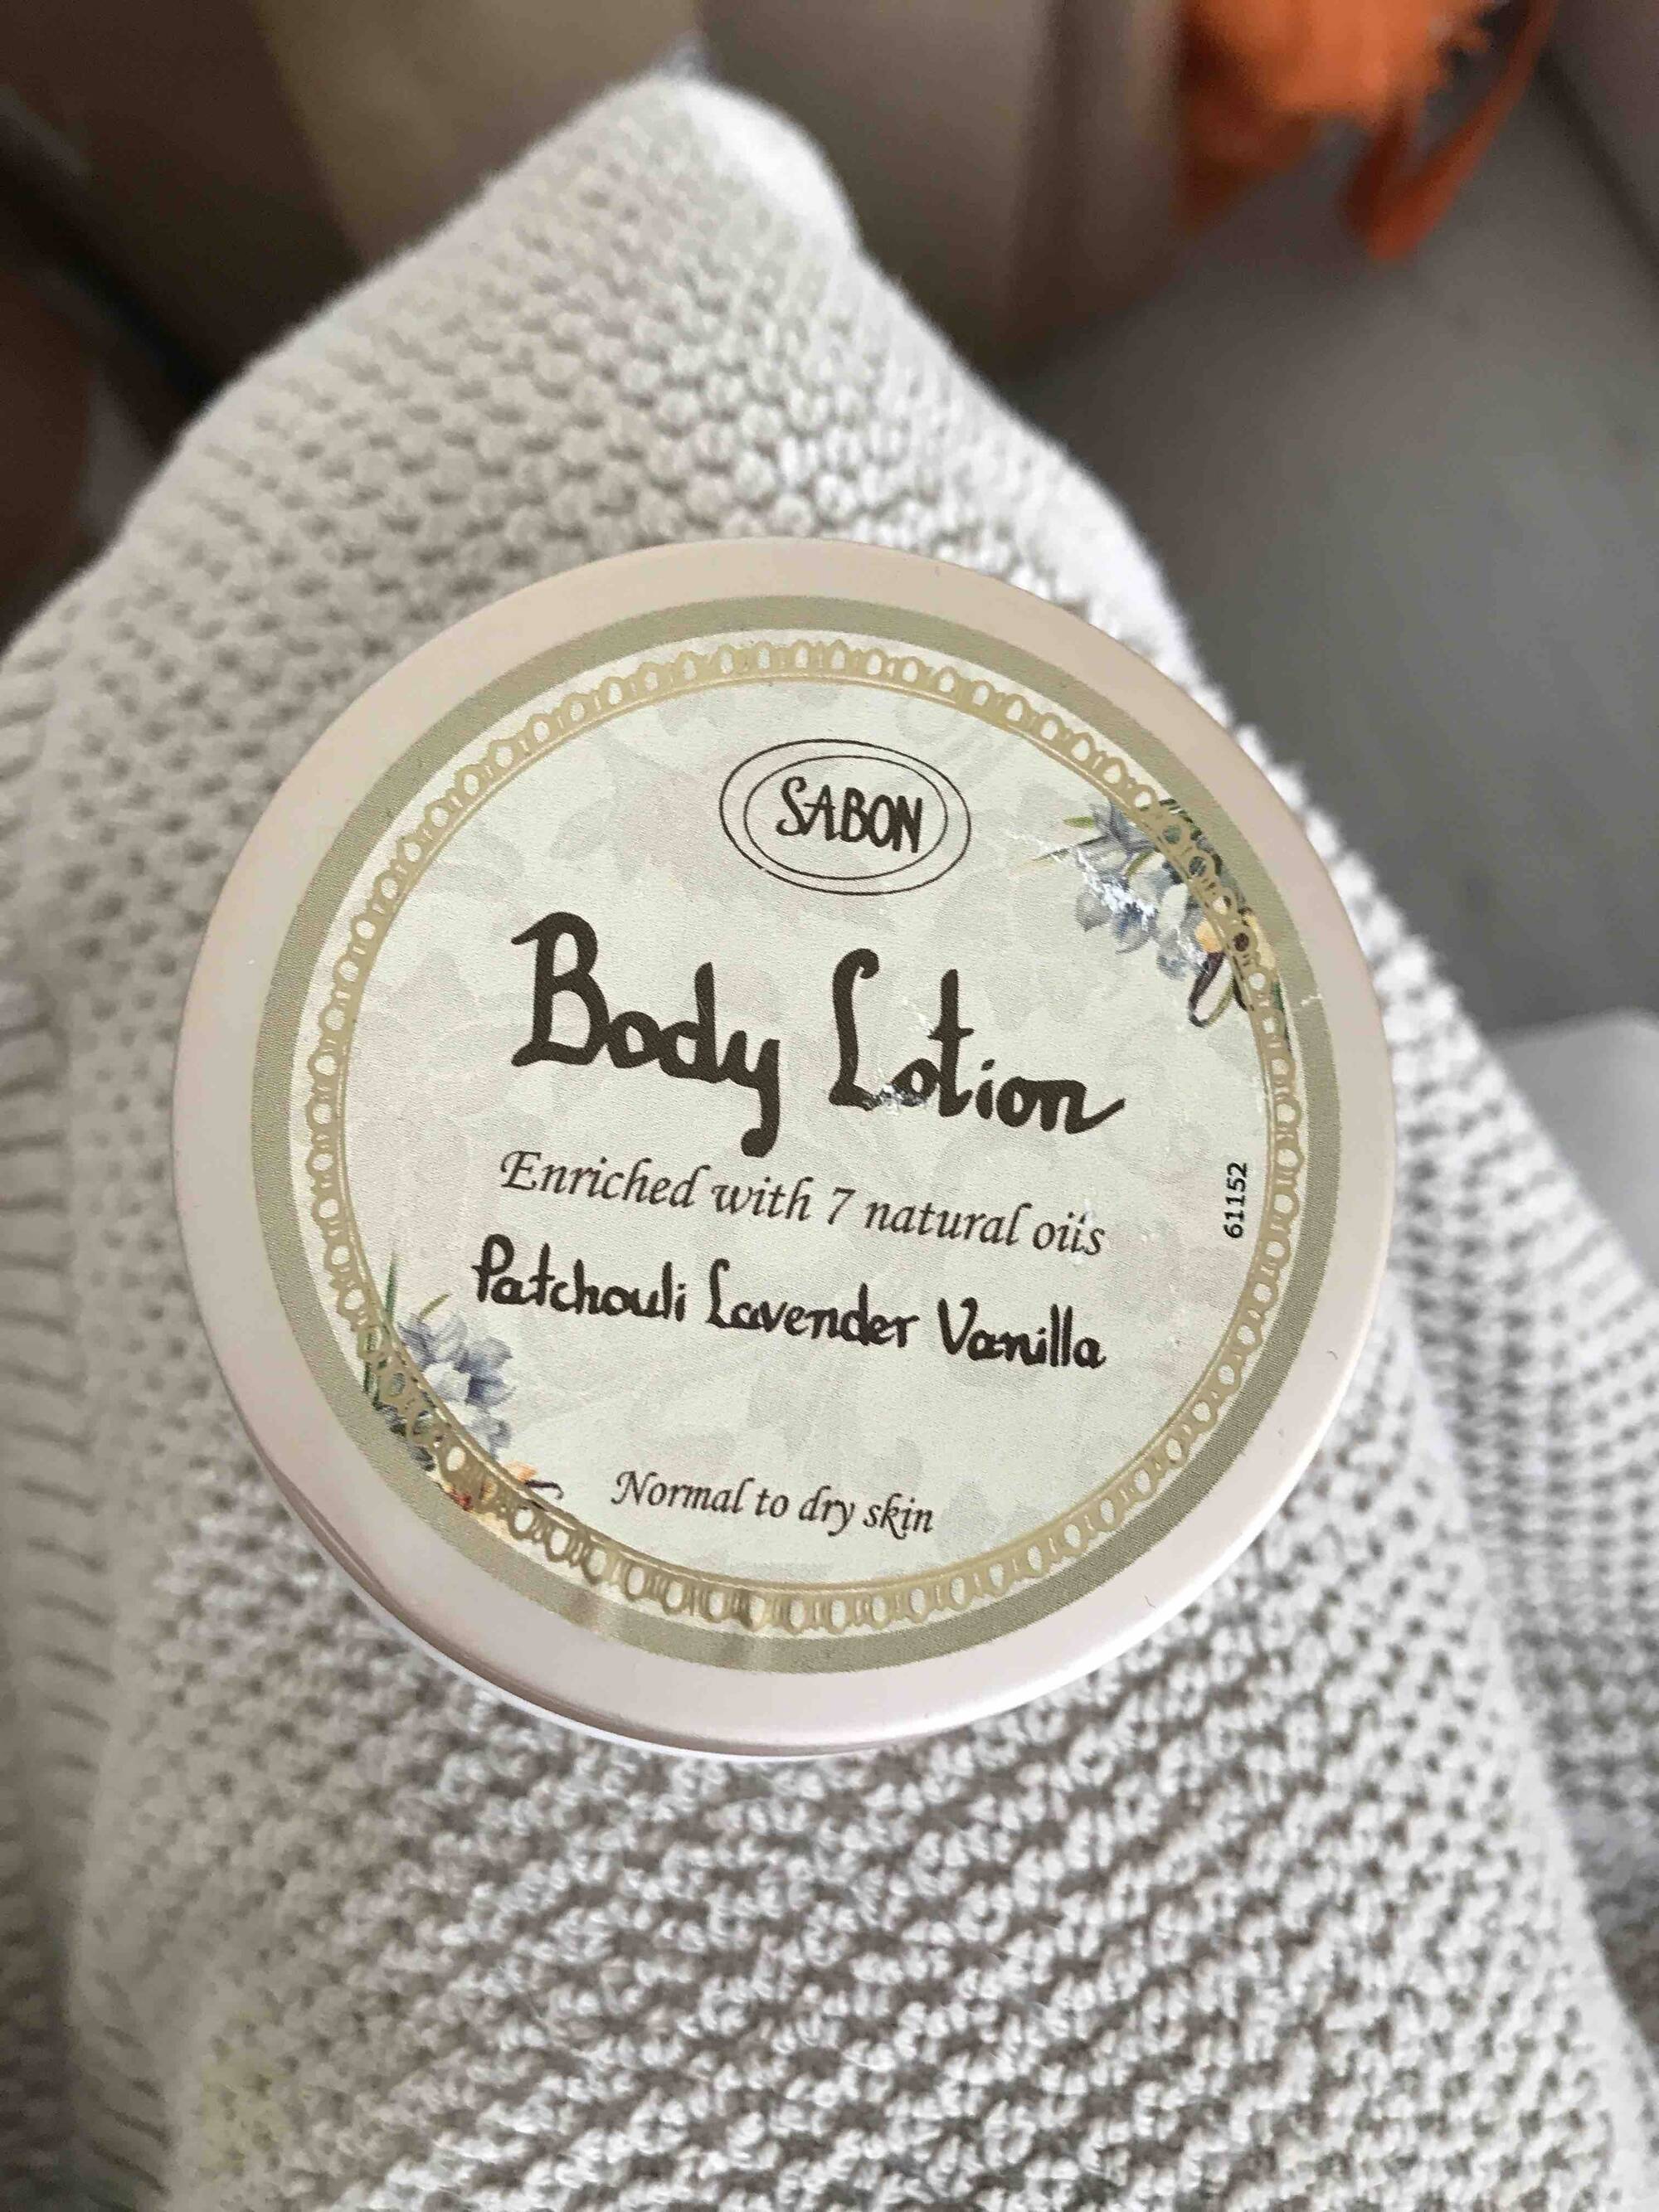 SABON - Patchouli lavender vanilla - Body lotion